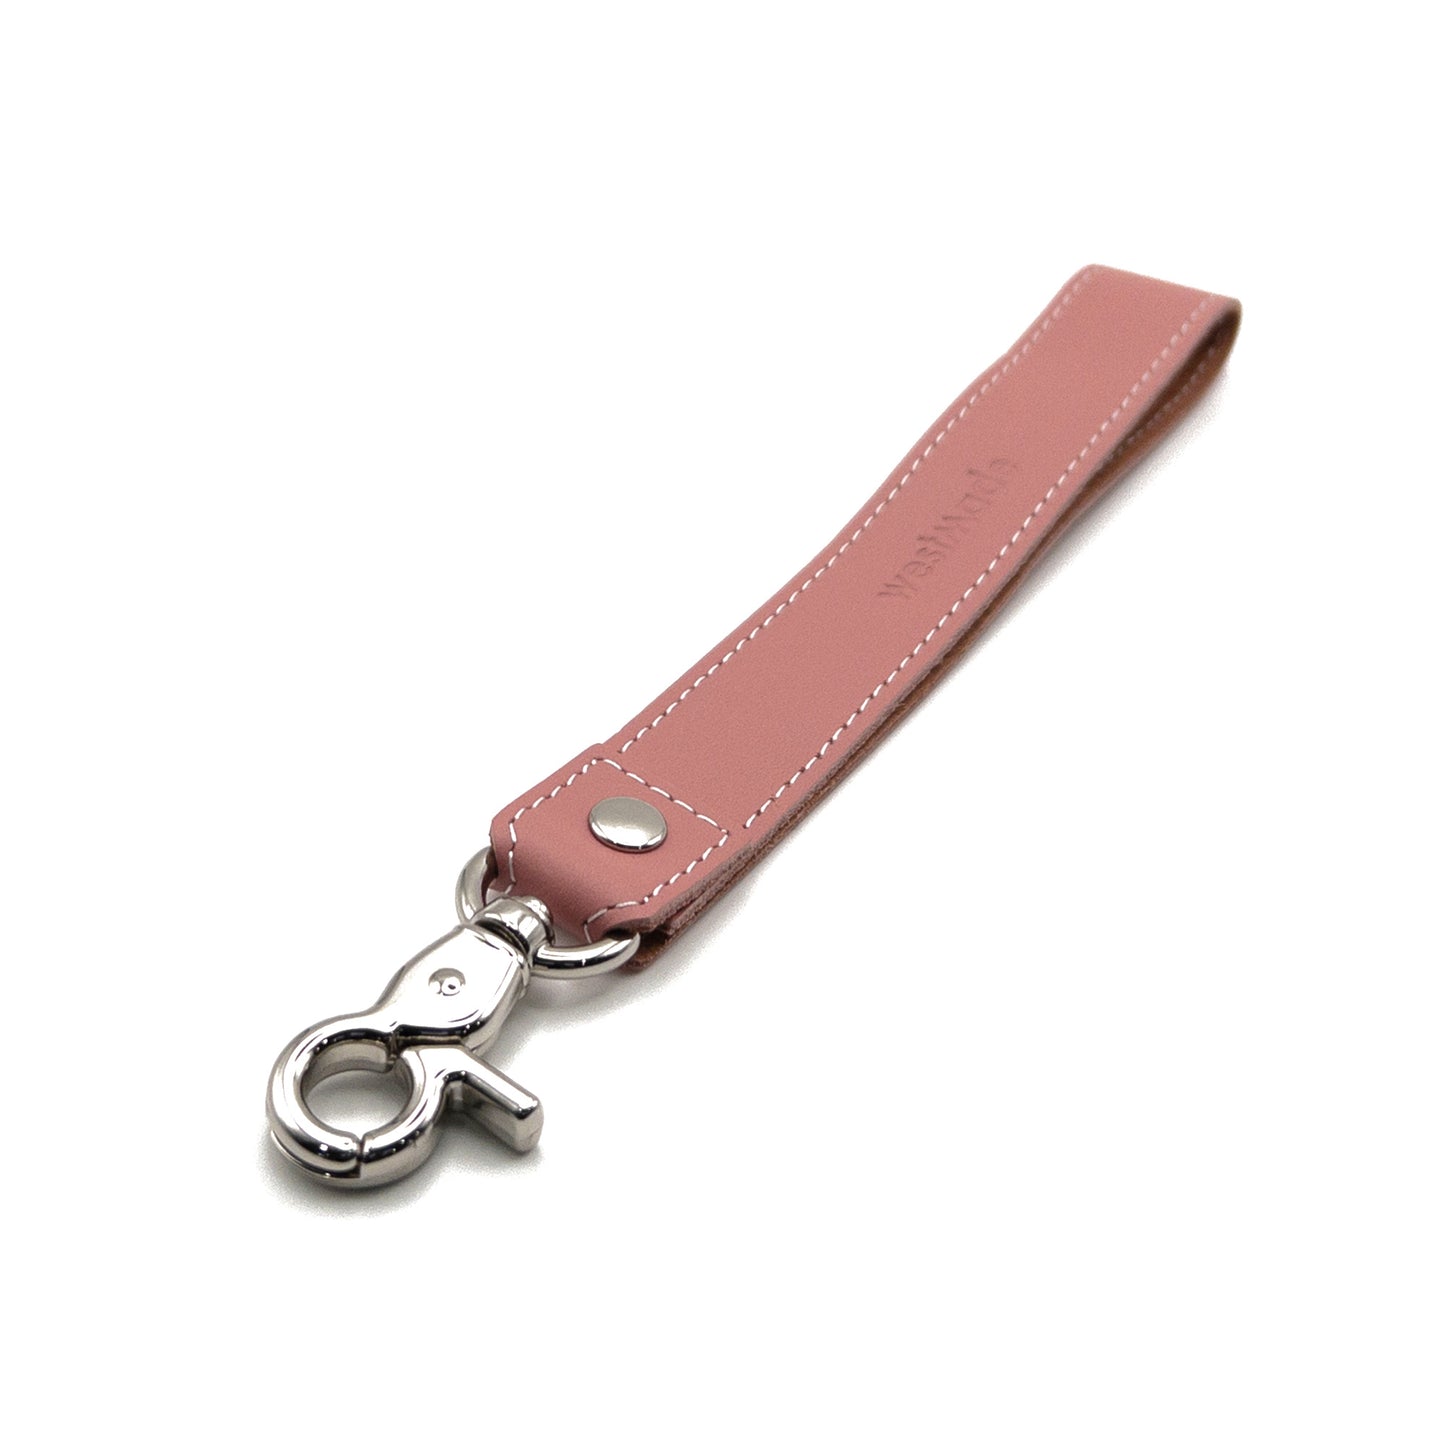 Westmade Mayfield Mini Minimalist Keychain Wallet with Wristlet Tether Dusty Pink/Cream